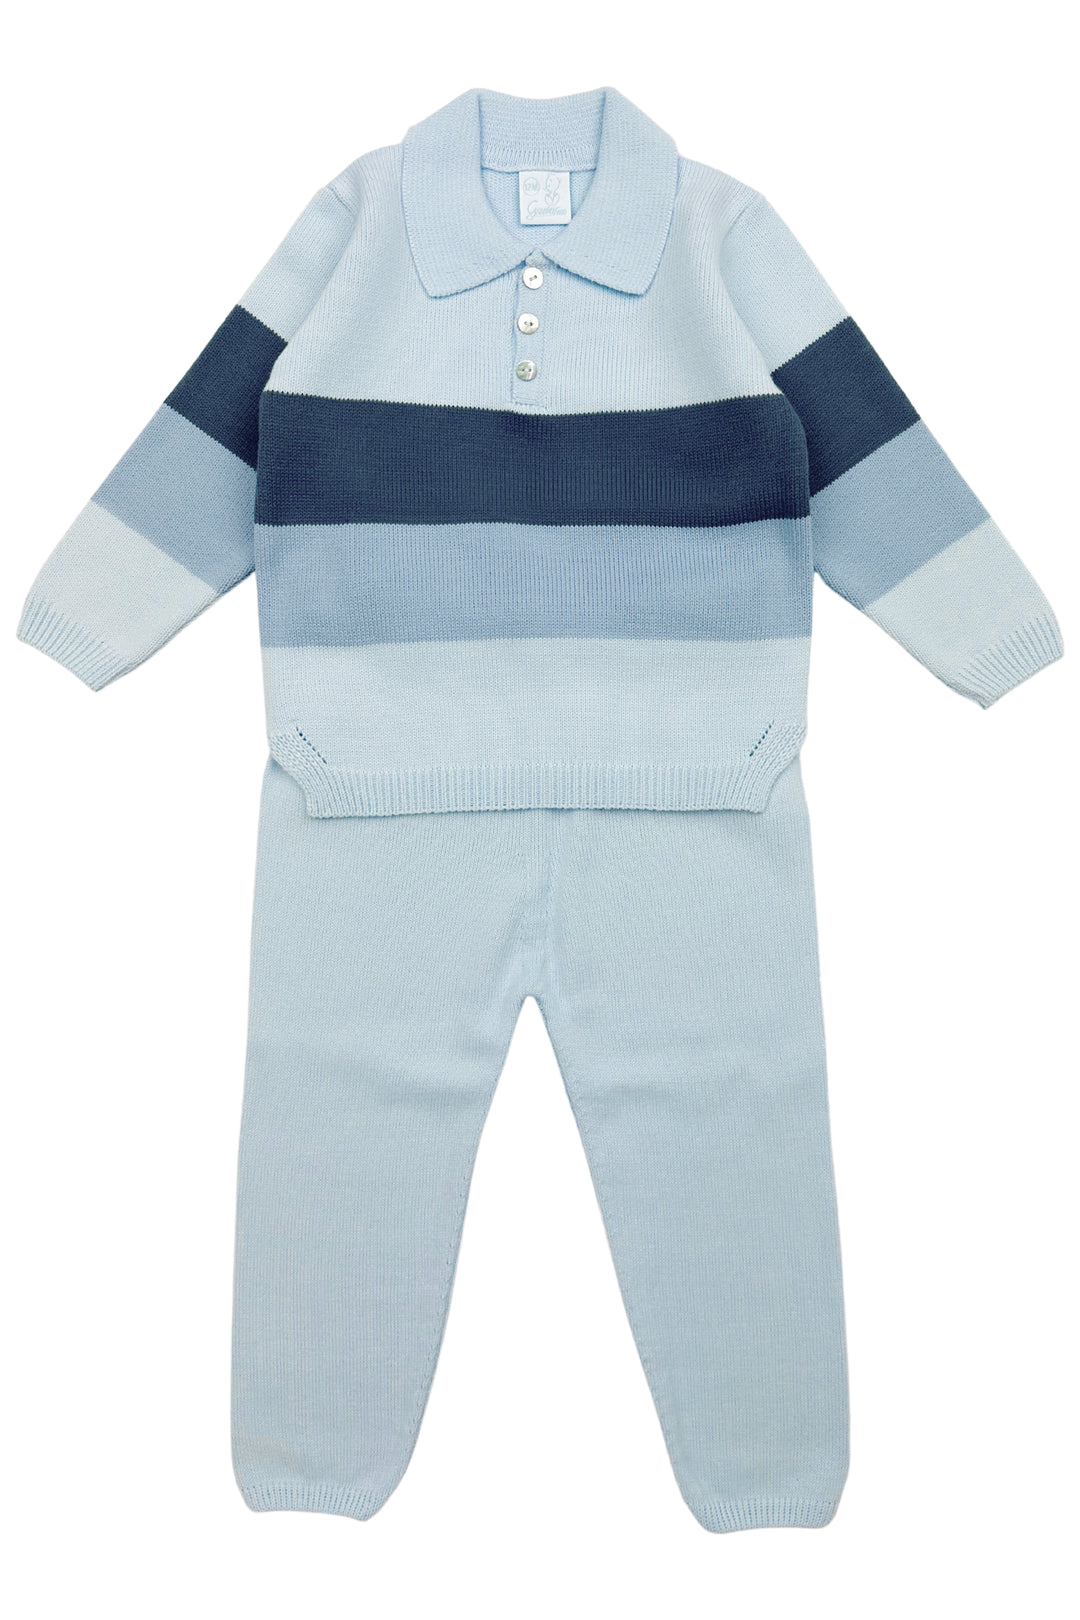 Granlei "Albert" Blue Striped Knit Top & Trousers | Millie and John